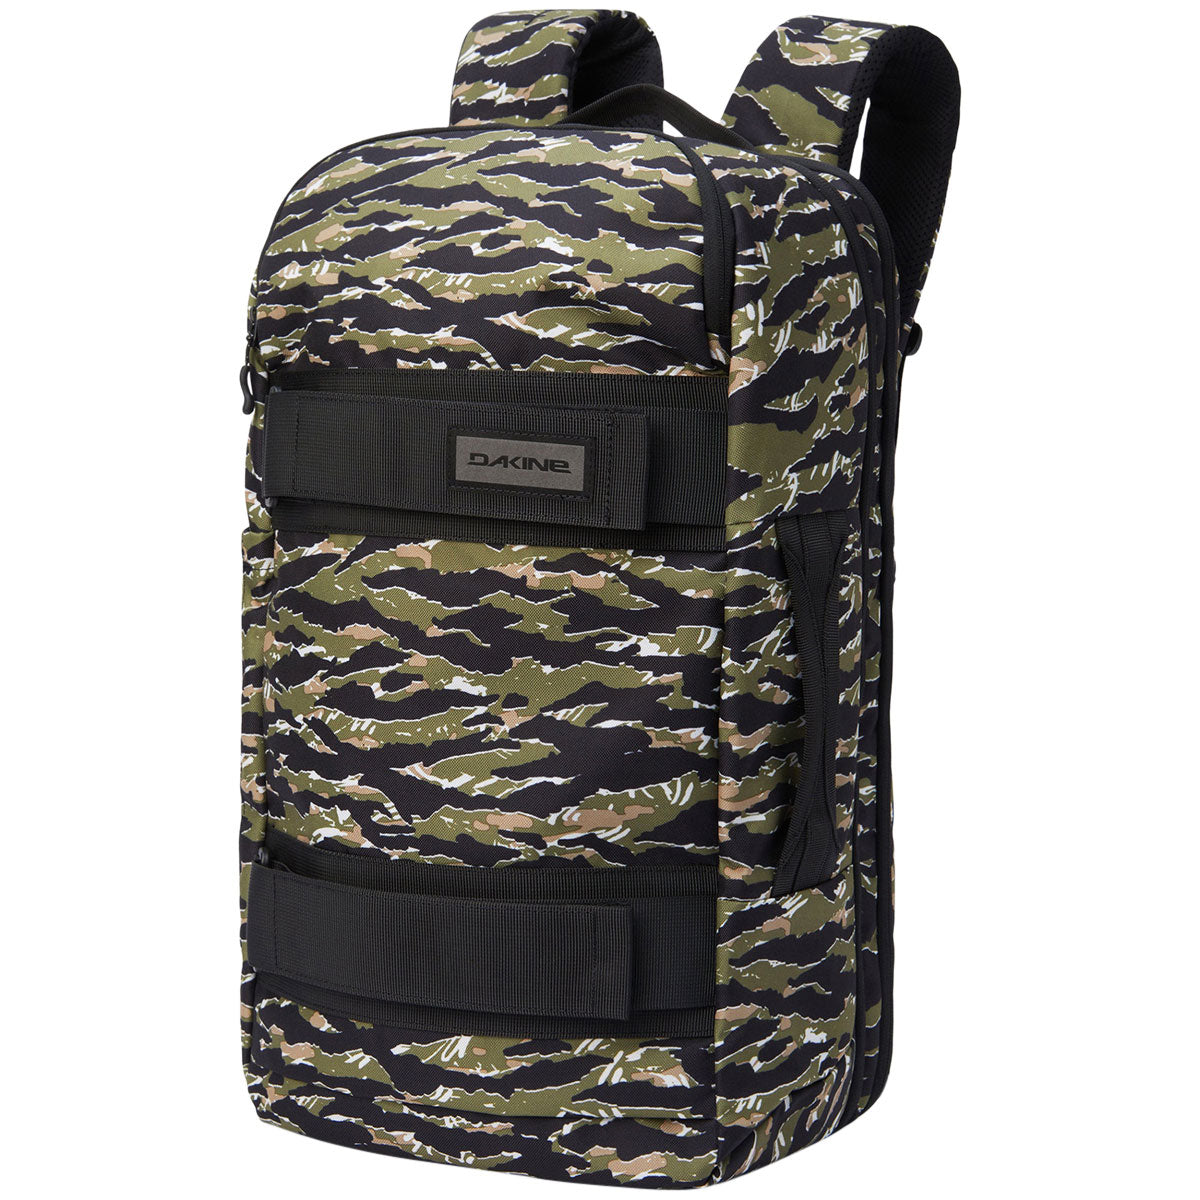 Dakine Mission Street Pack Deluxe 32L Backpack - Tiger Camo image 1